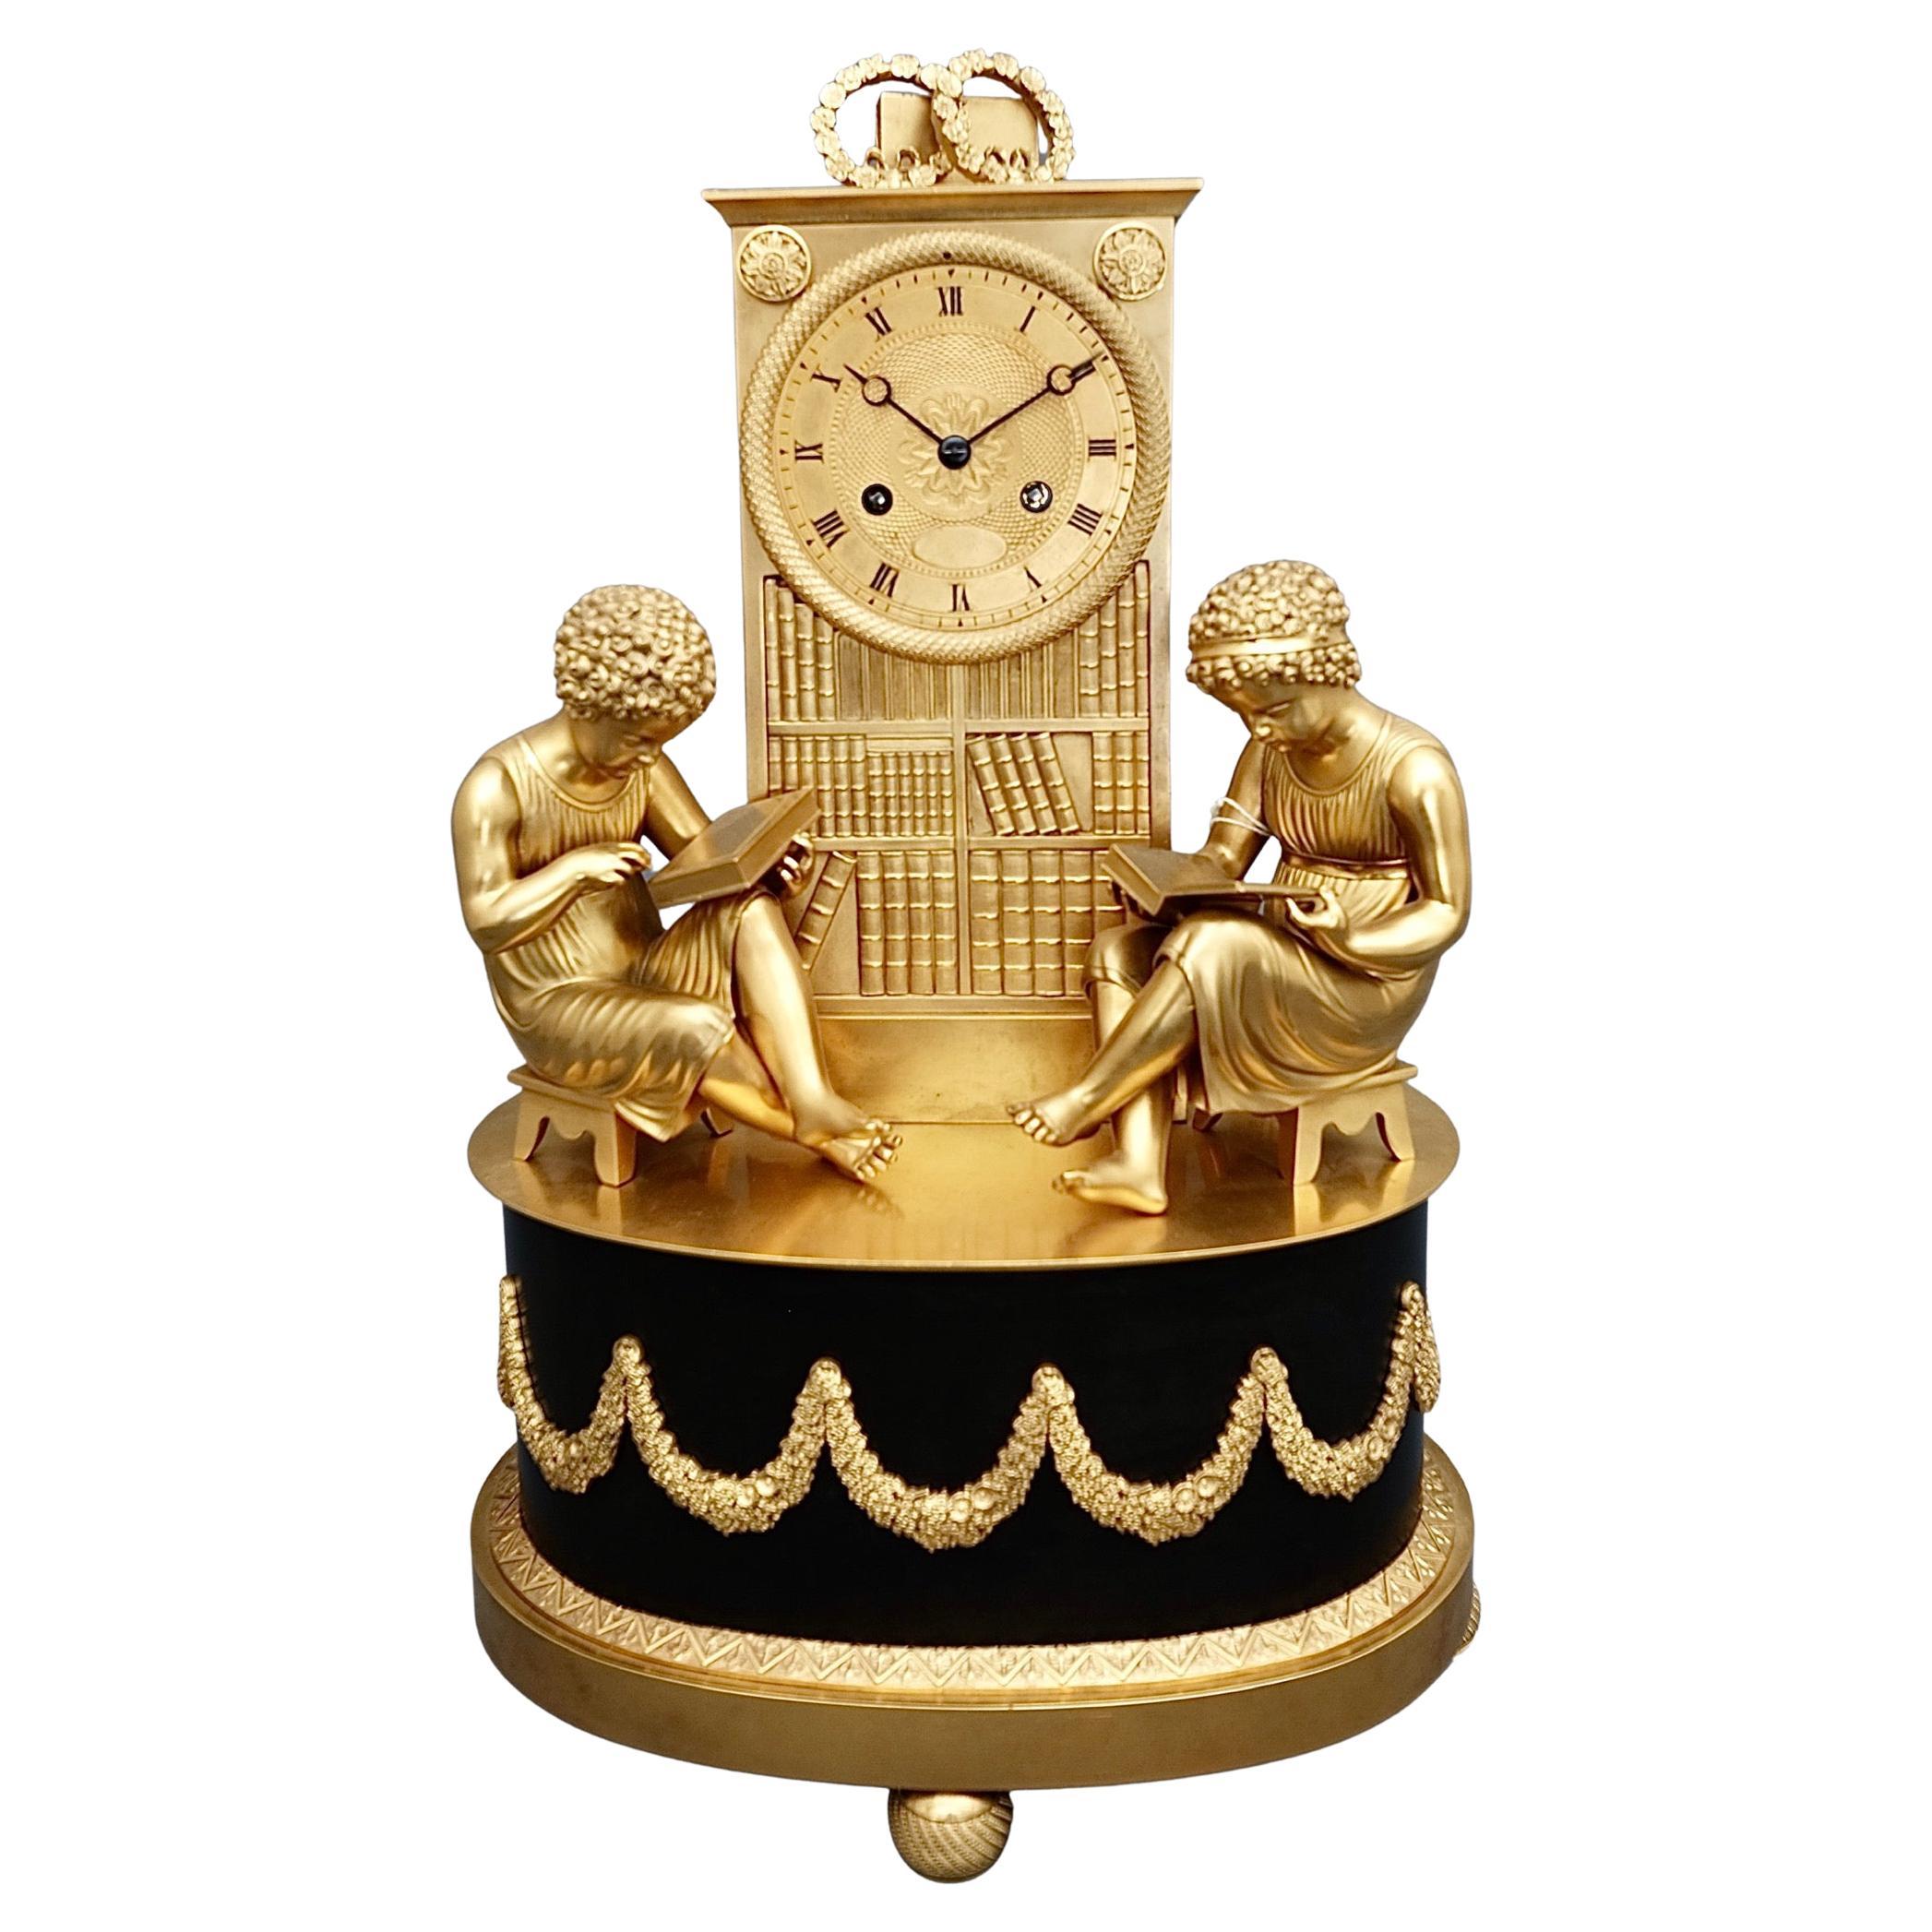 Antique French Empire Ormolu Reloj de biblioteca en huelga